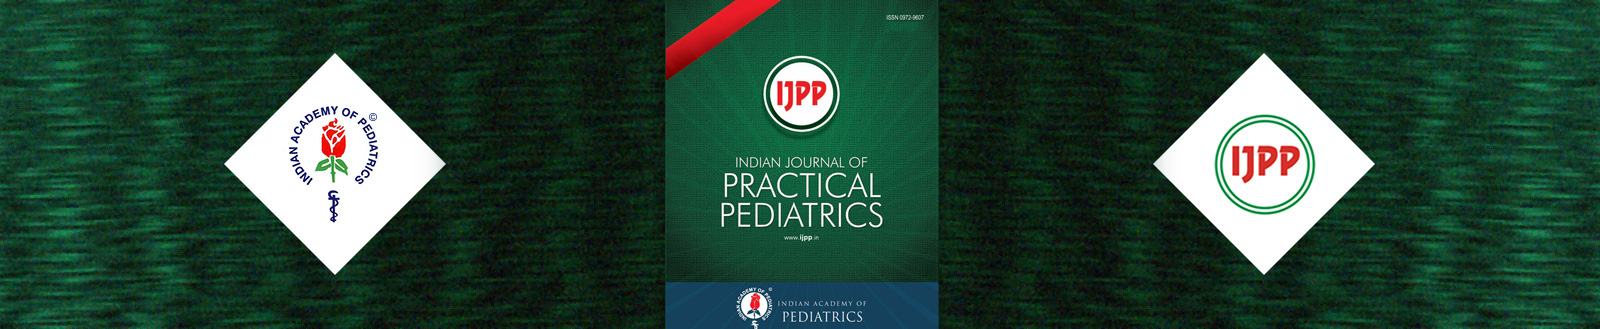 Indian Journal of Practical Pediatrics, Chennai